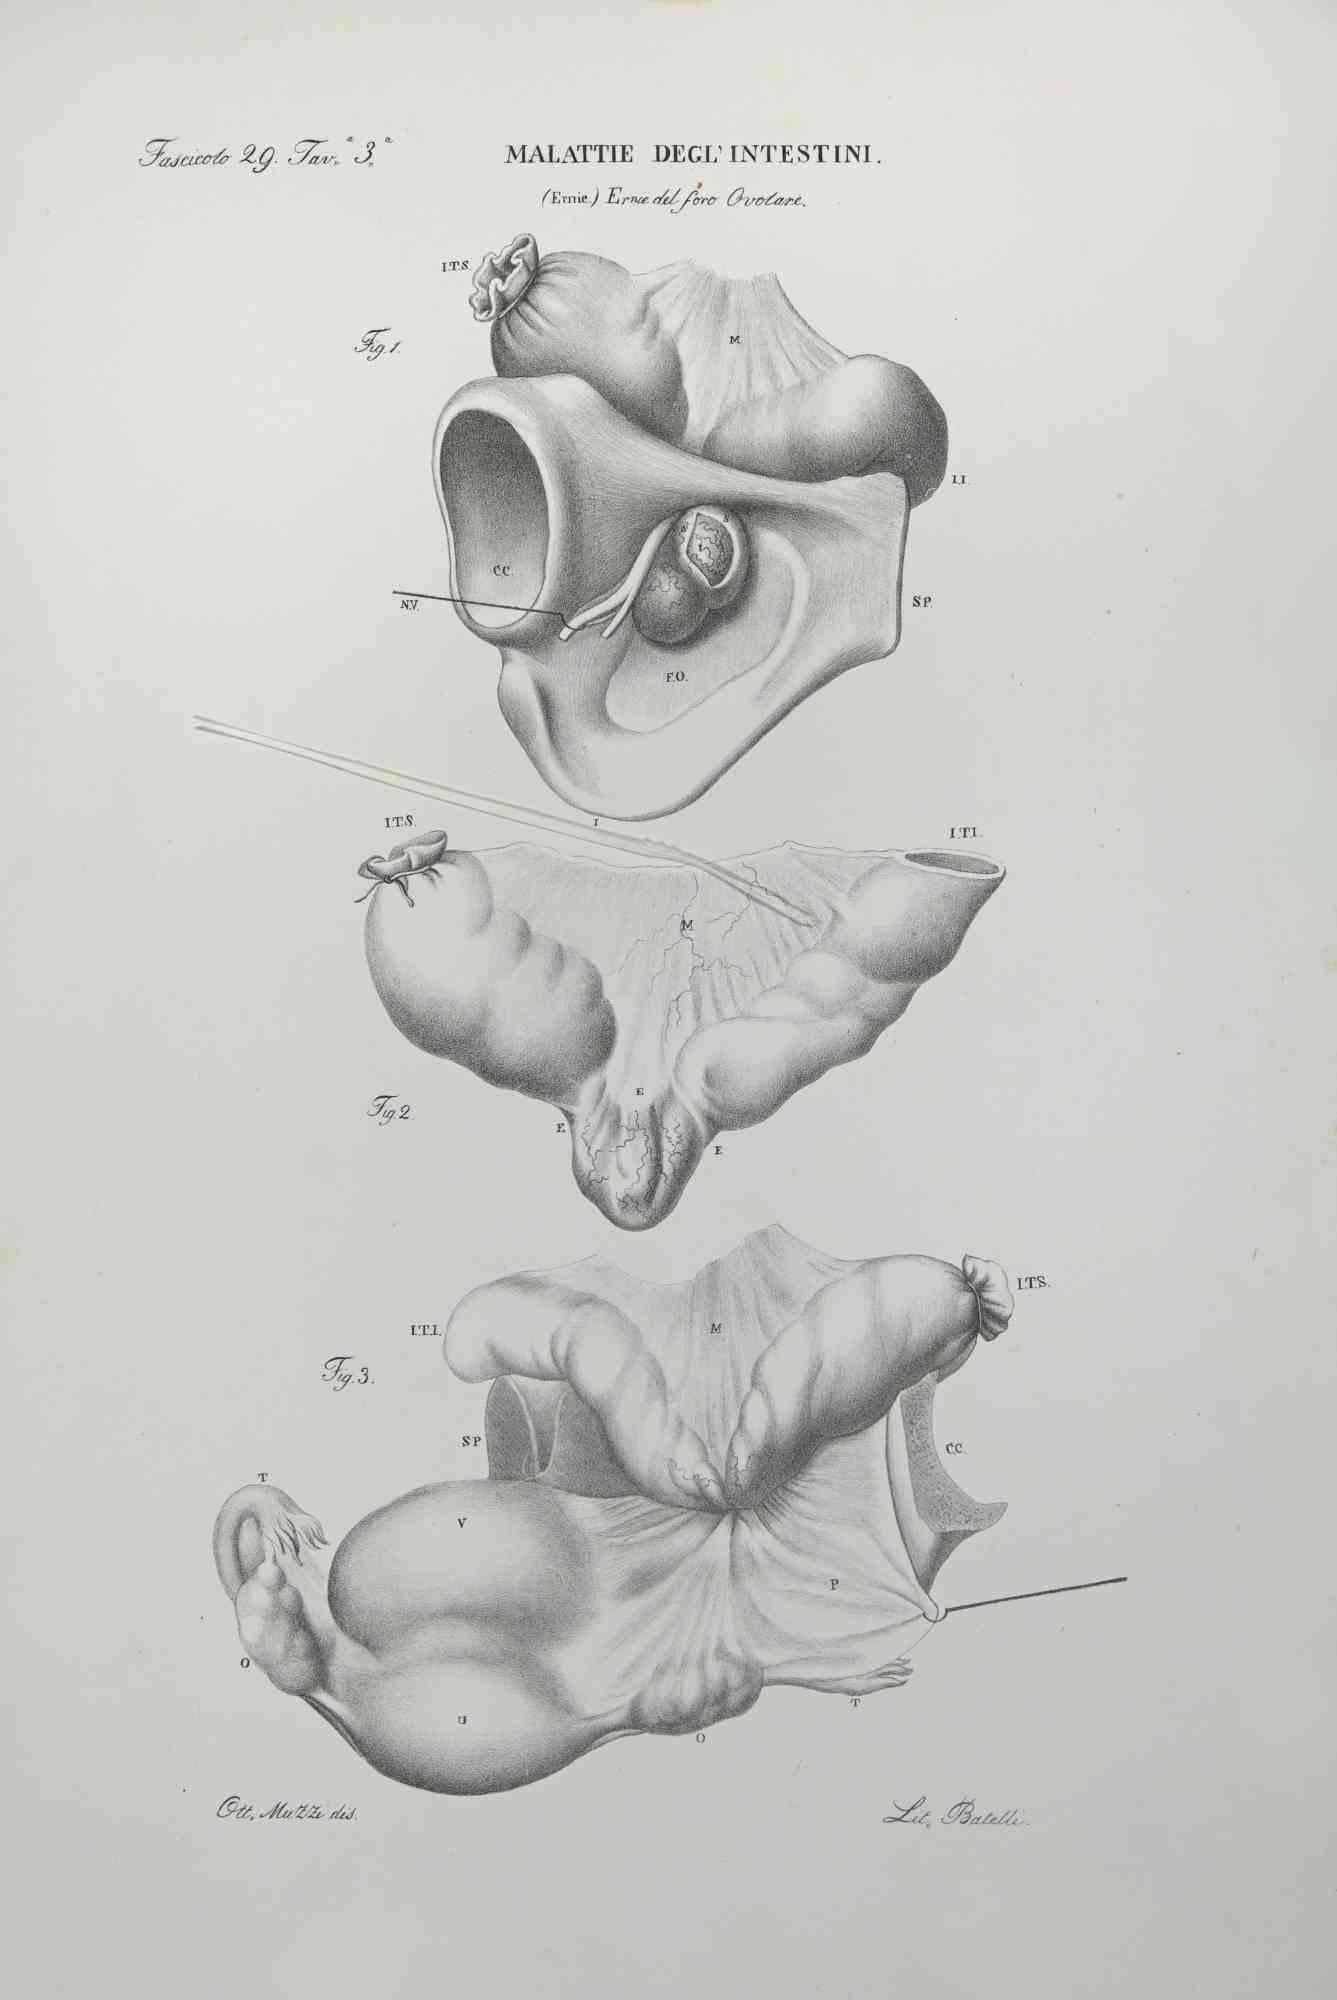 Bowel Diseases - Lithograph By Ottavio Muzzi - 1843